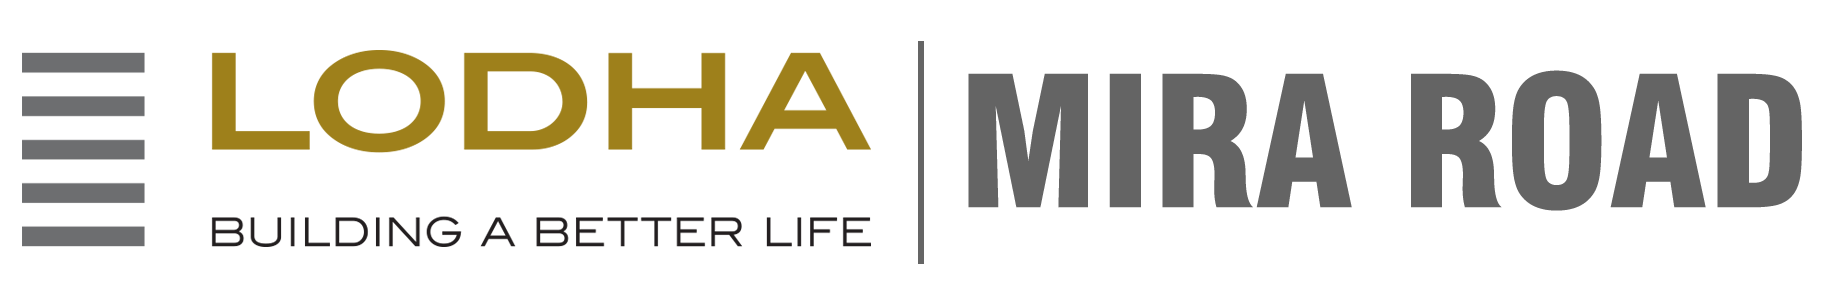 LODHA MIRA ROAD PROJECT Logo